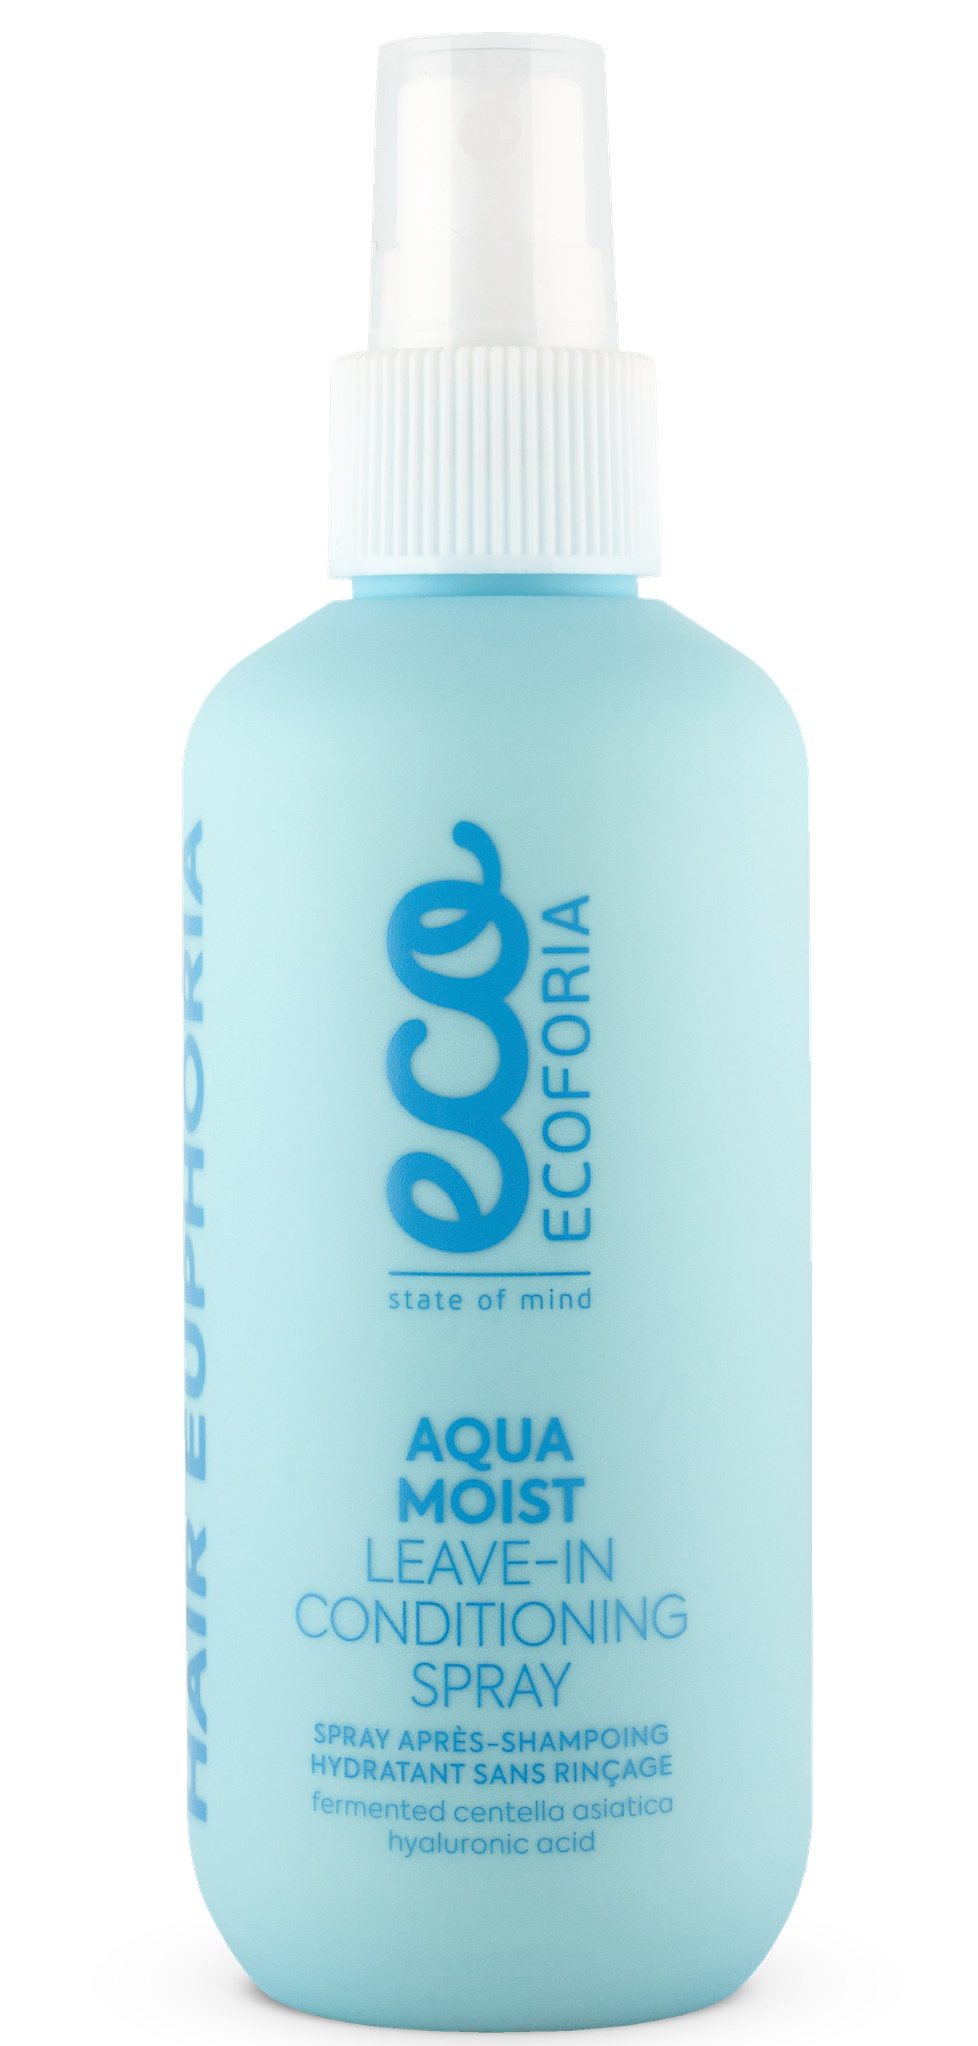 Ecoforia Aqua Moist Leave-In Conditioning Spray